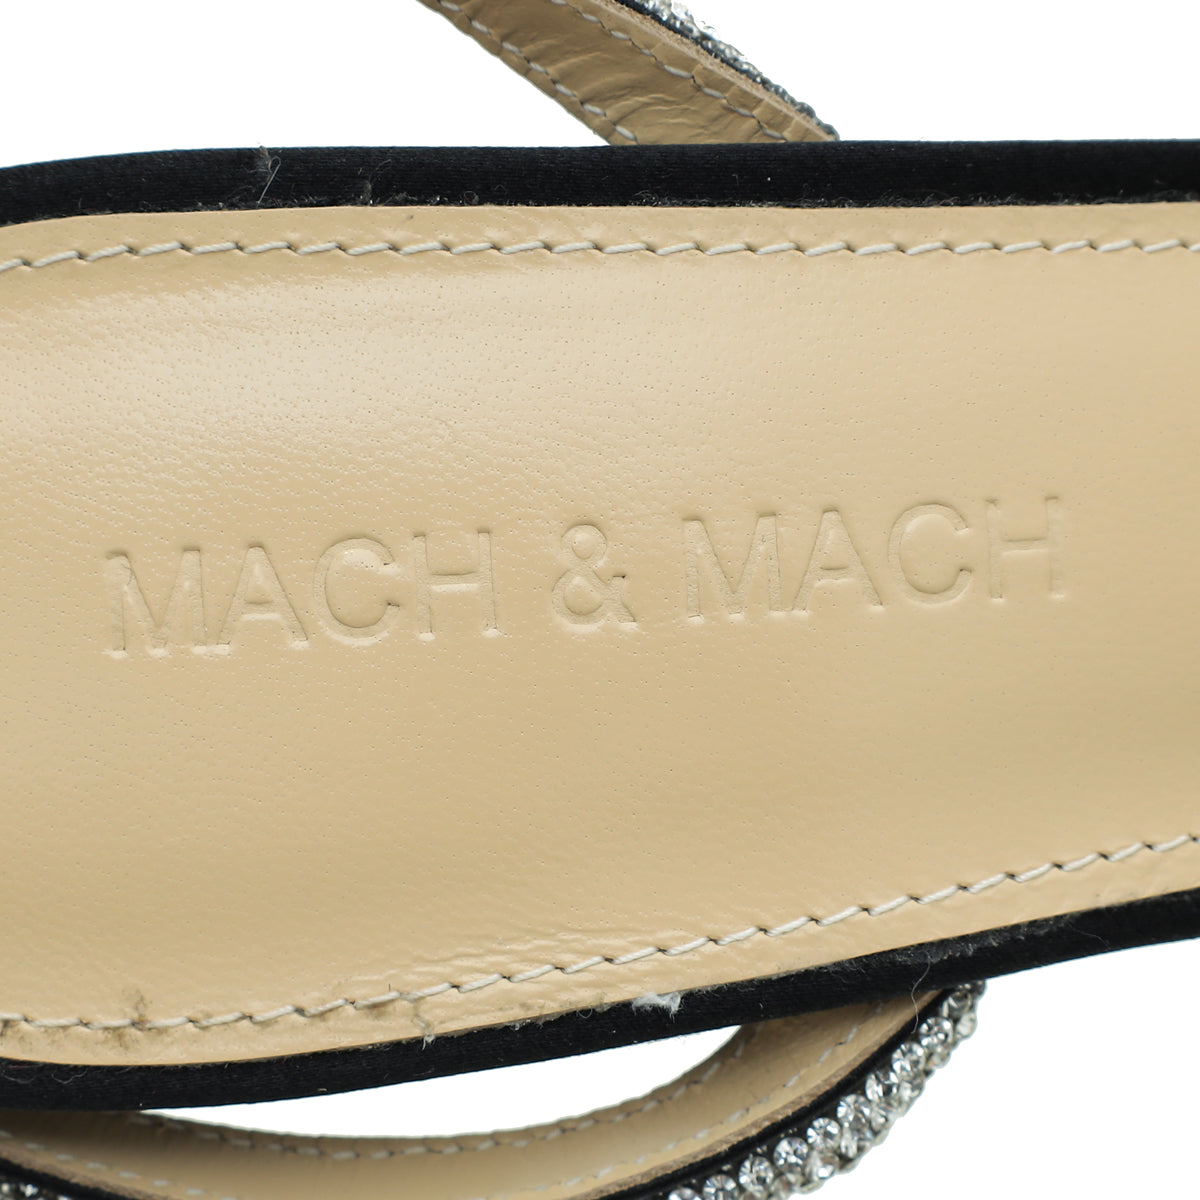 Mach & Mach Black Satin Crystal Bow Ankle Strap Pumps 37.5